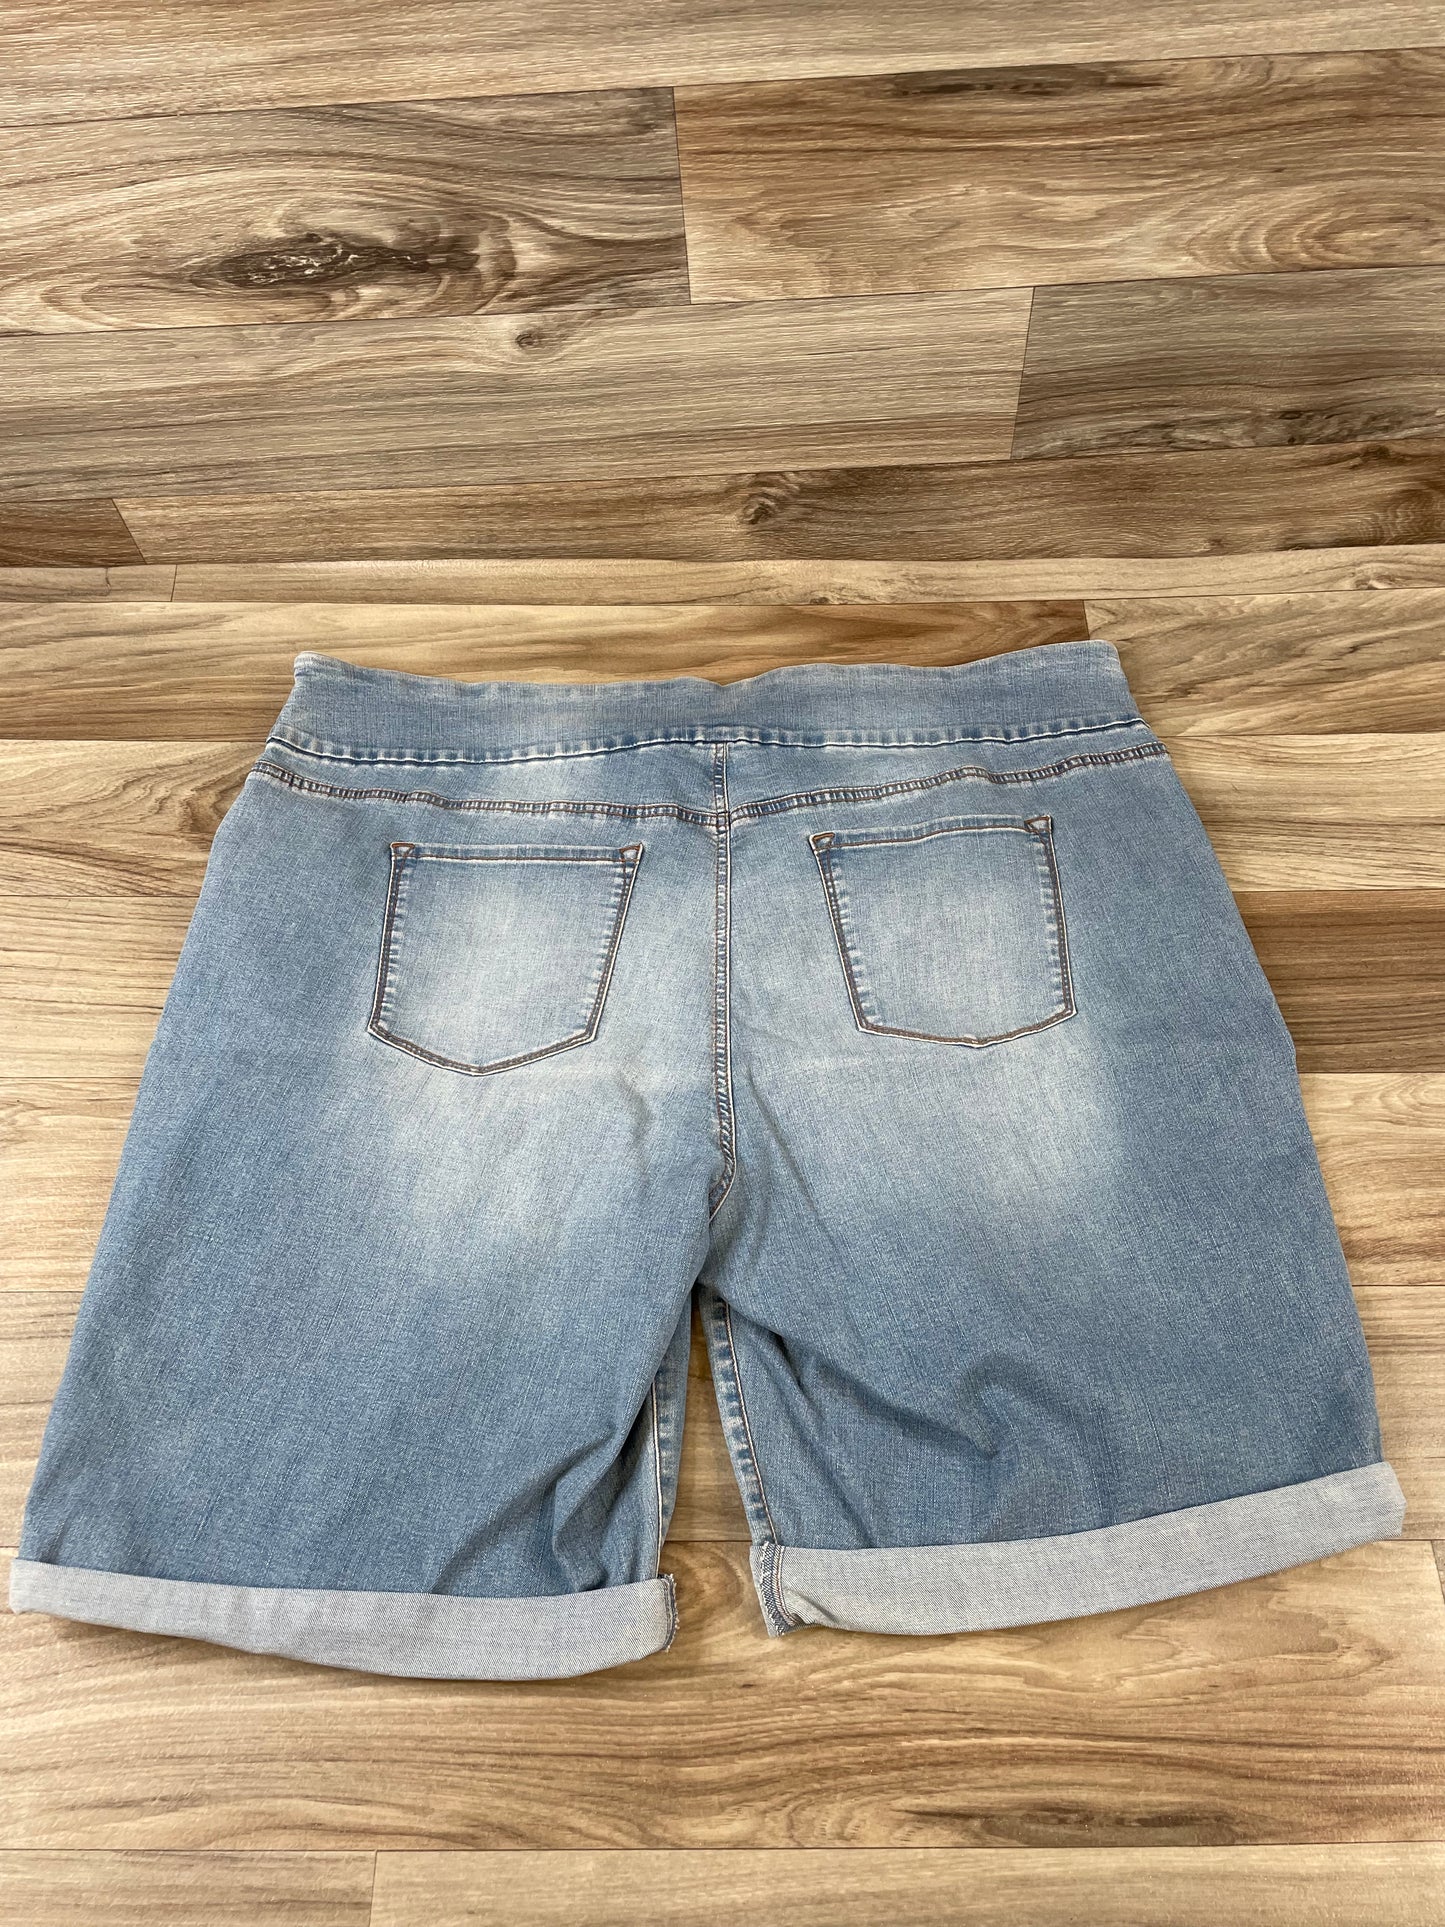 Shorts By Gloria Vanderbilt  Size: 24w